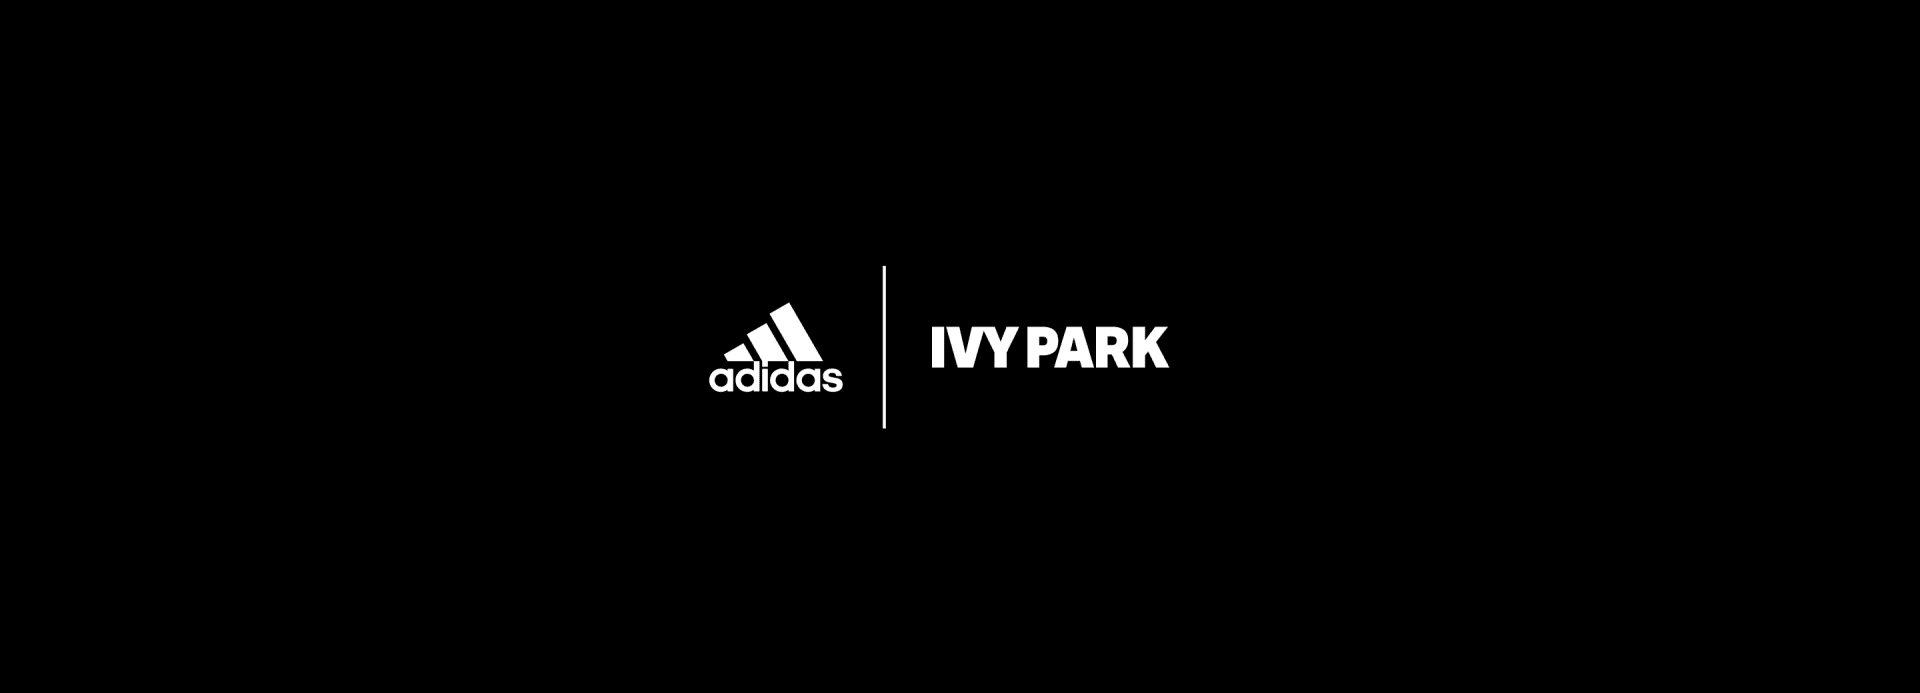 adidas x IVY PARK logo on black background